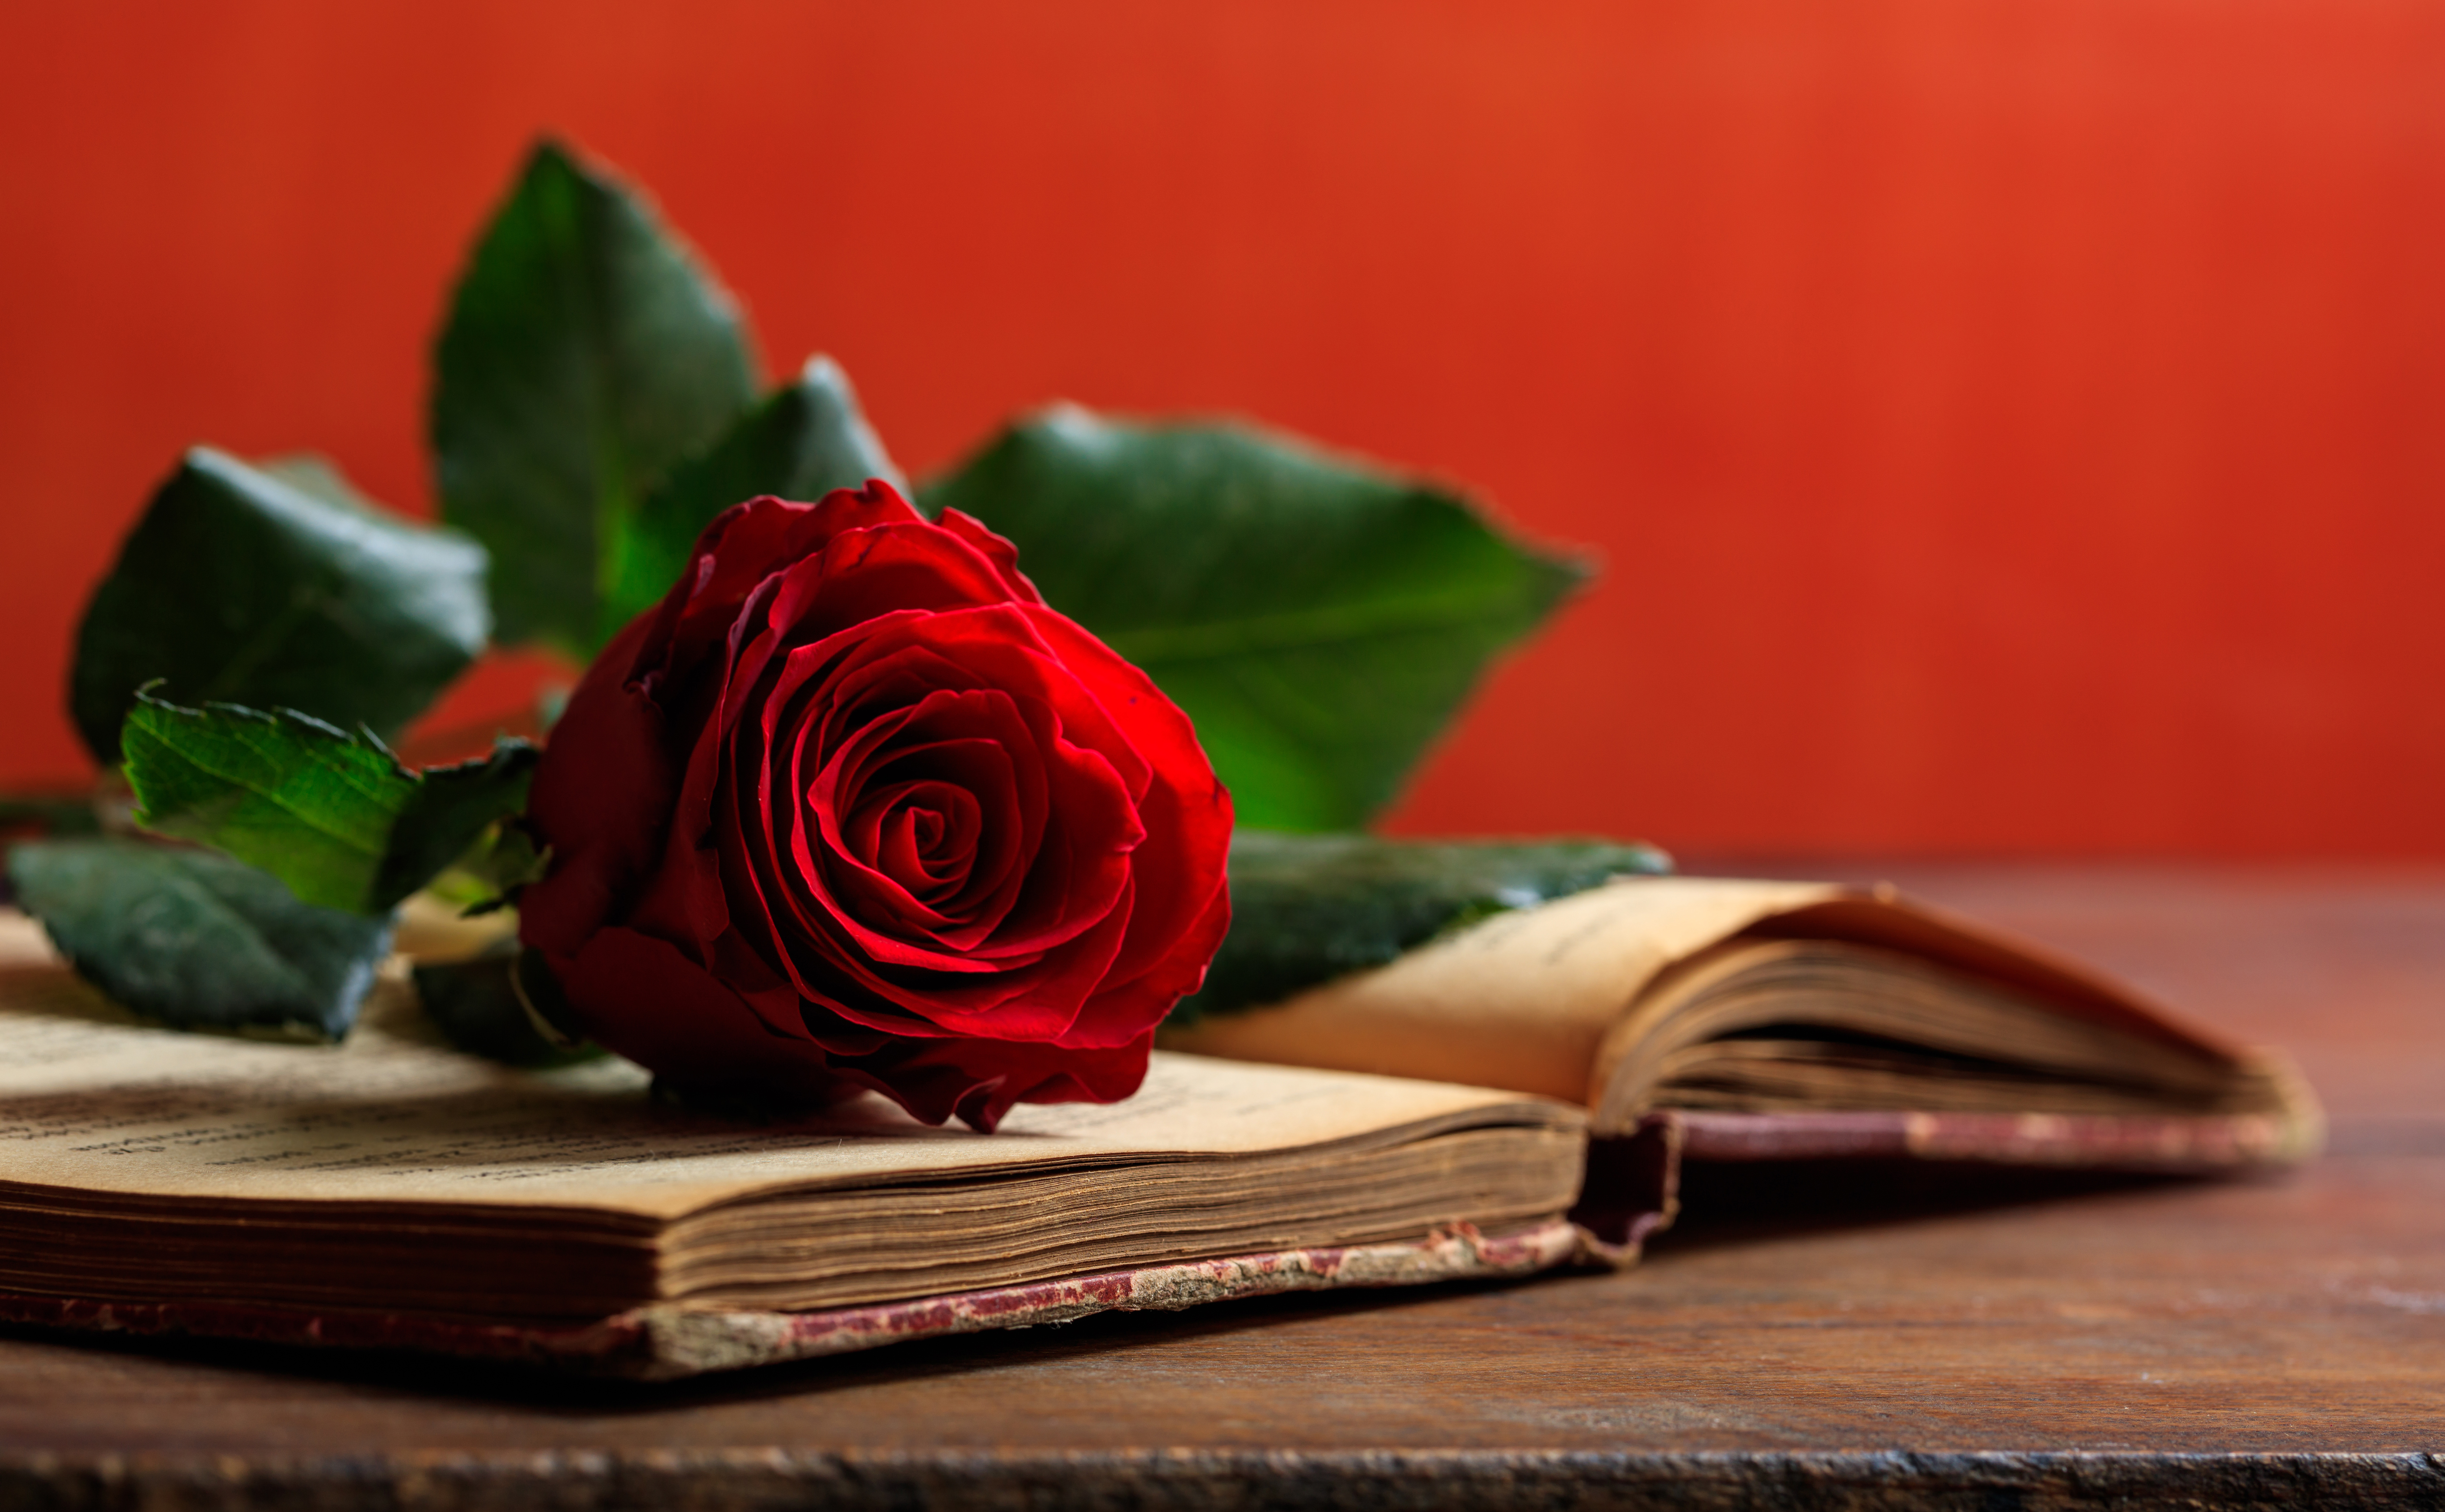 Red rose on a vintage book on dark background